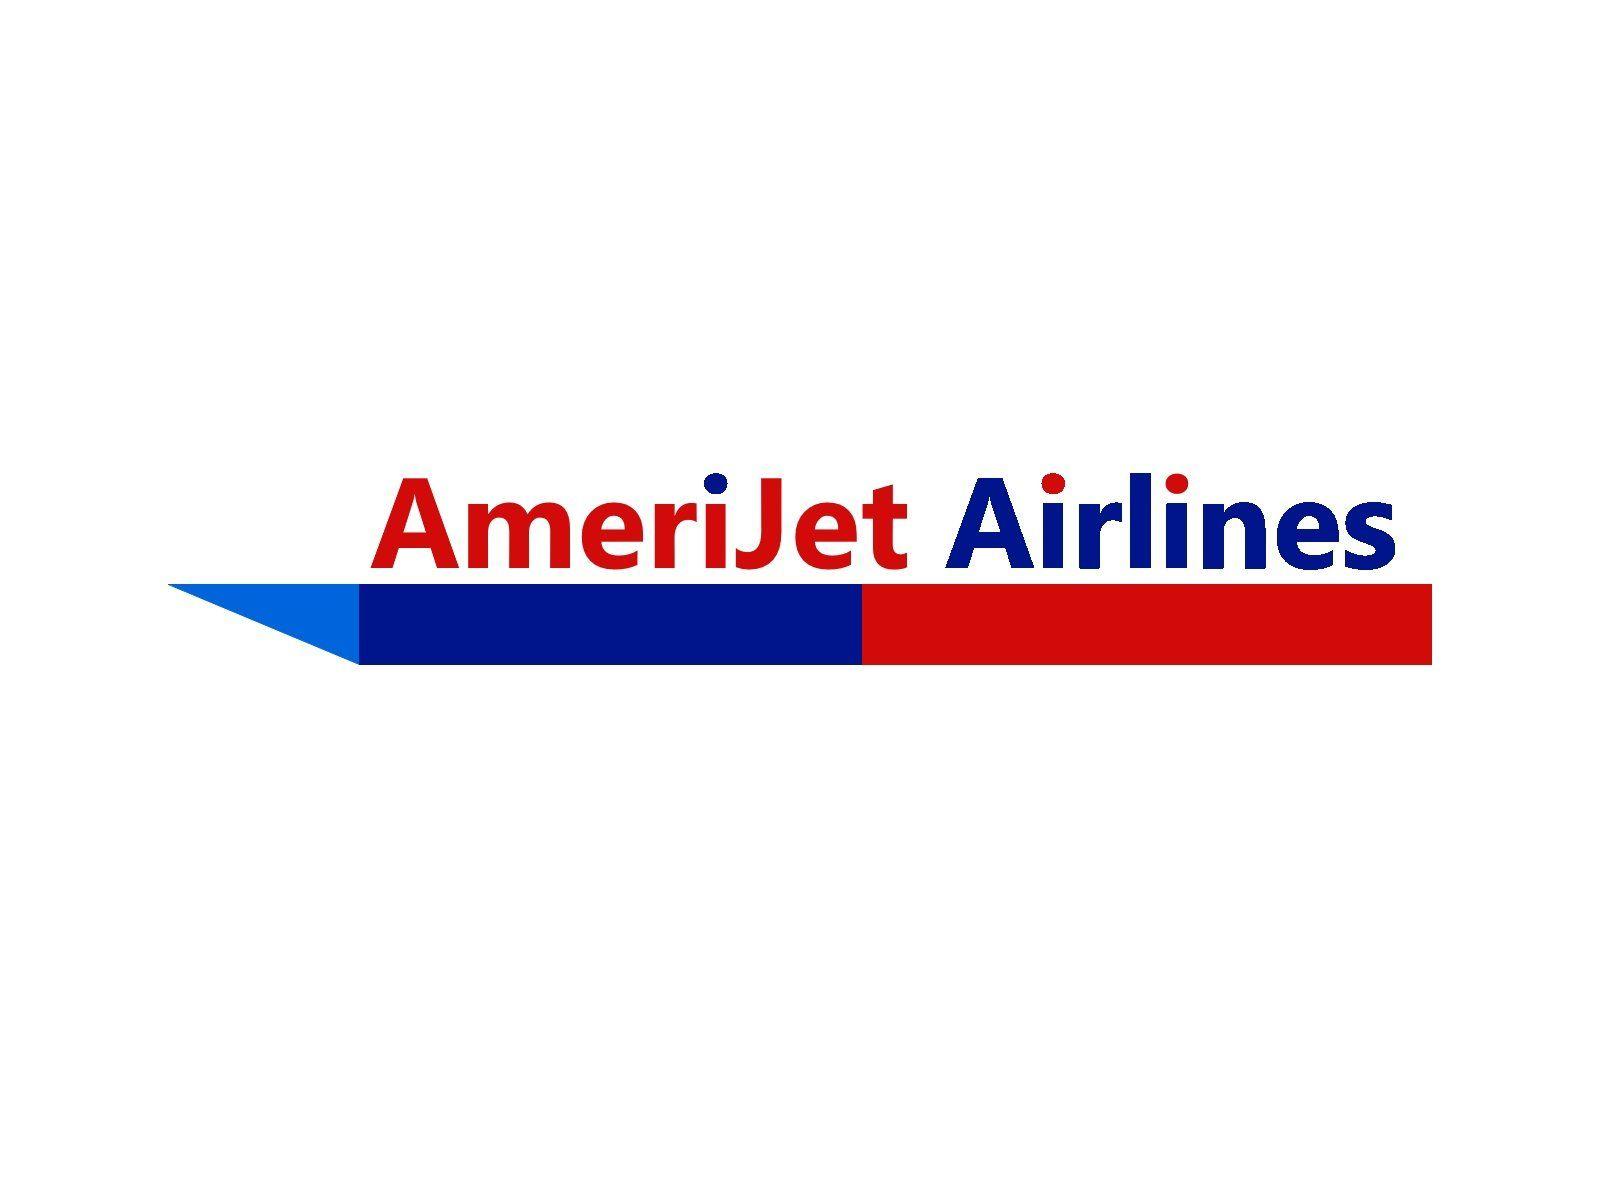 Amerijet Logo - AmeriJet Airlines- feedback requested